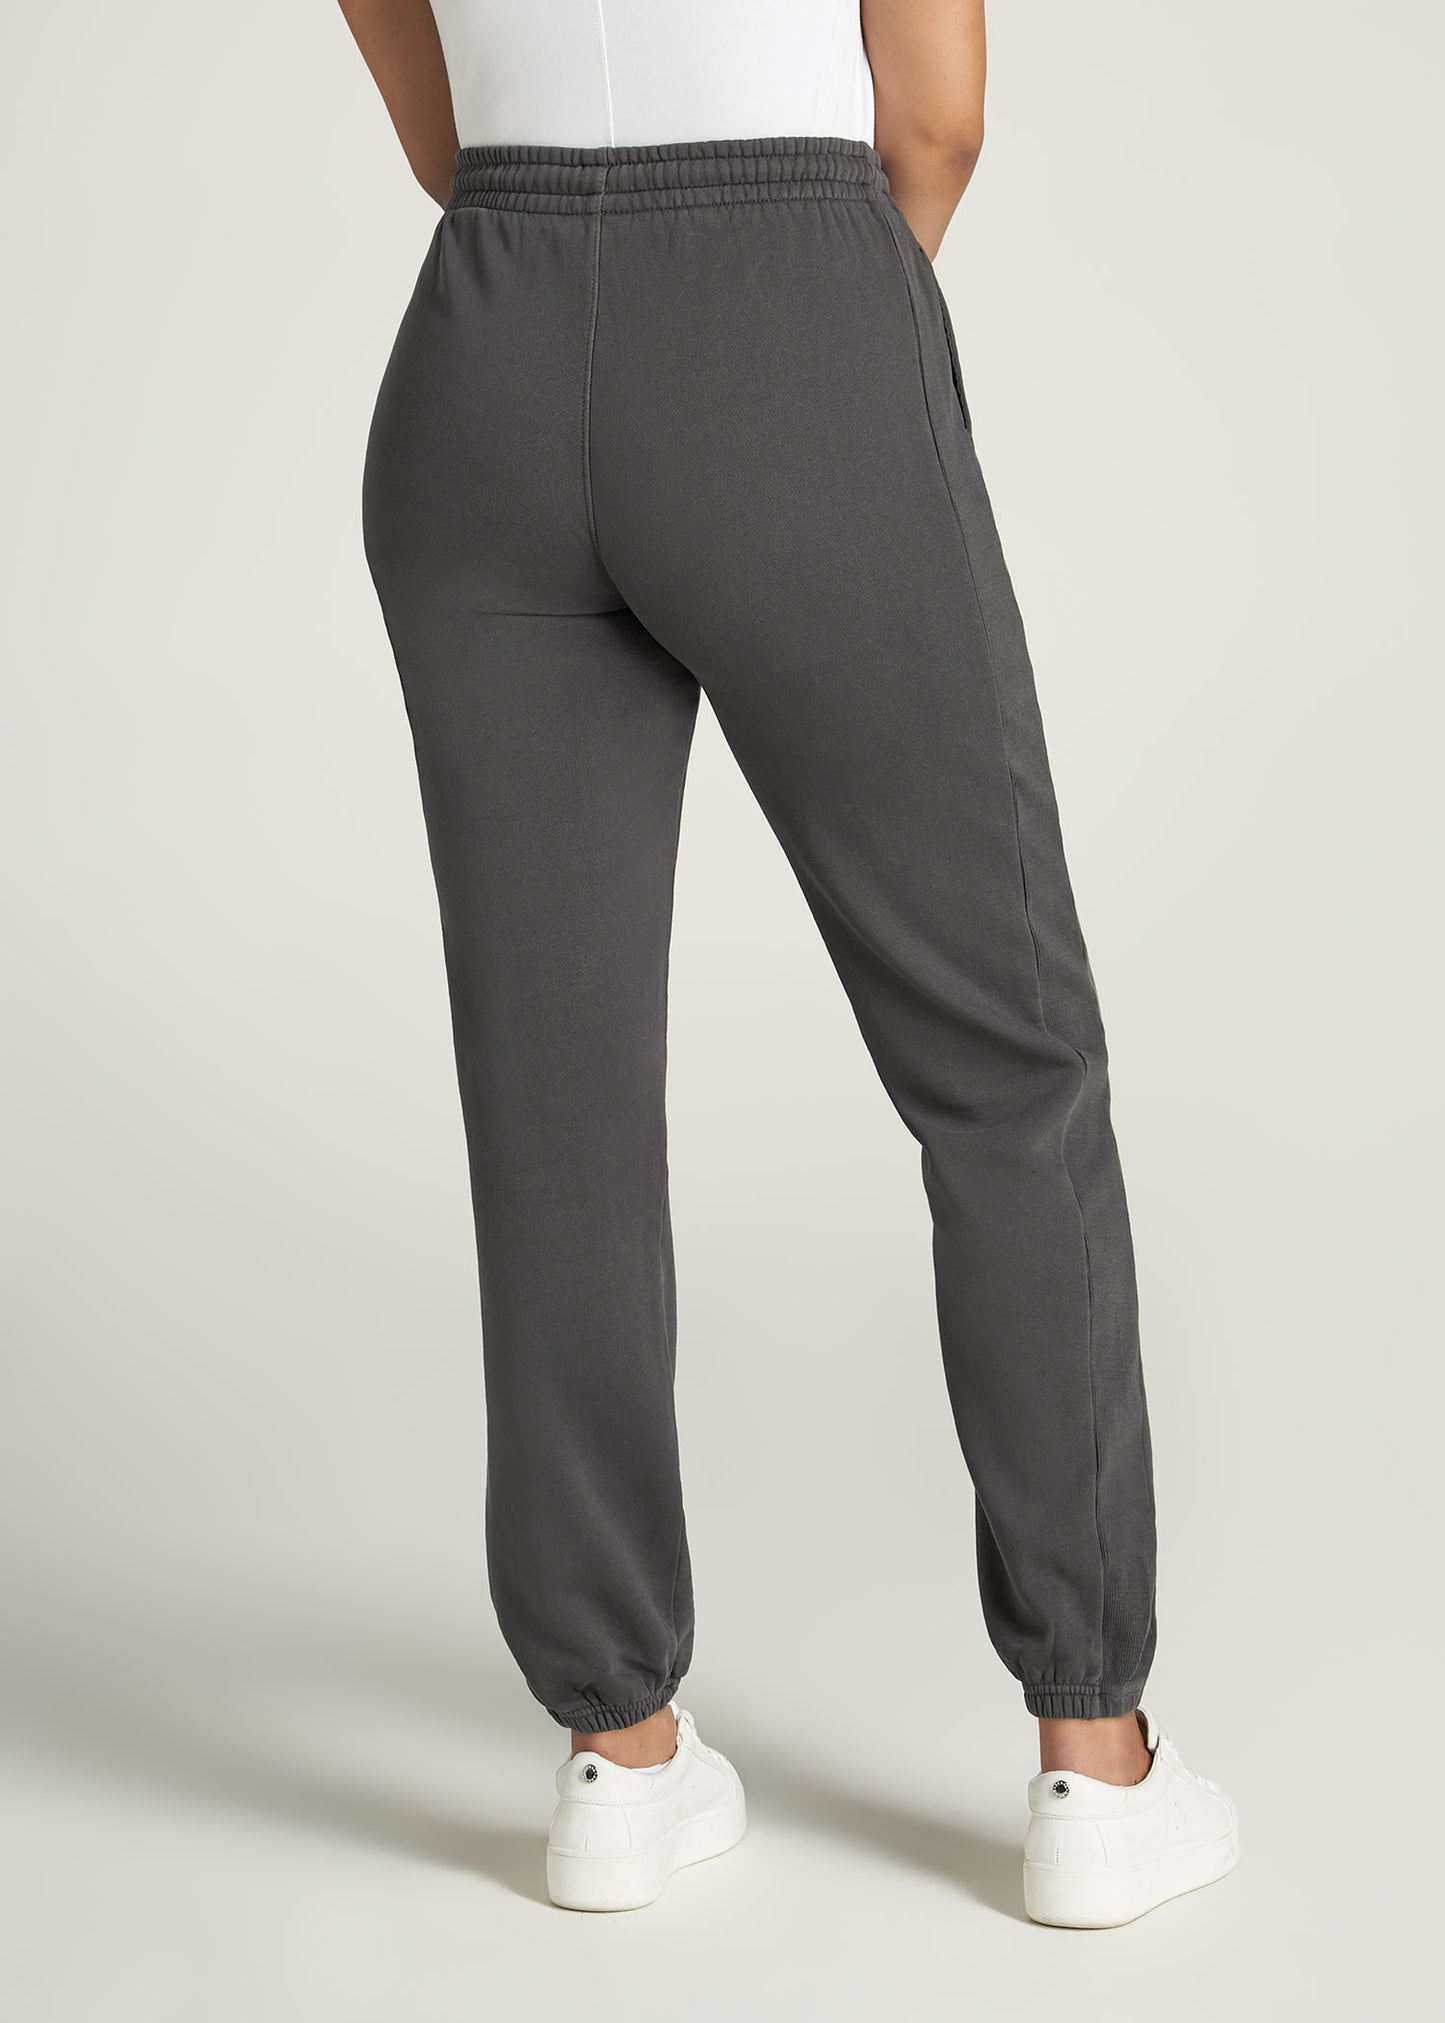 Tek Gear Sweatpants Womens Extra Large Gray Pull On Elastic Waist